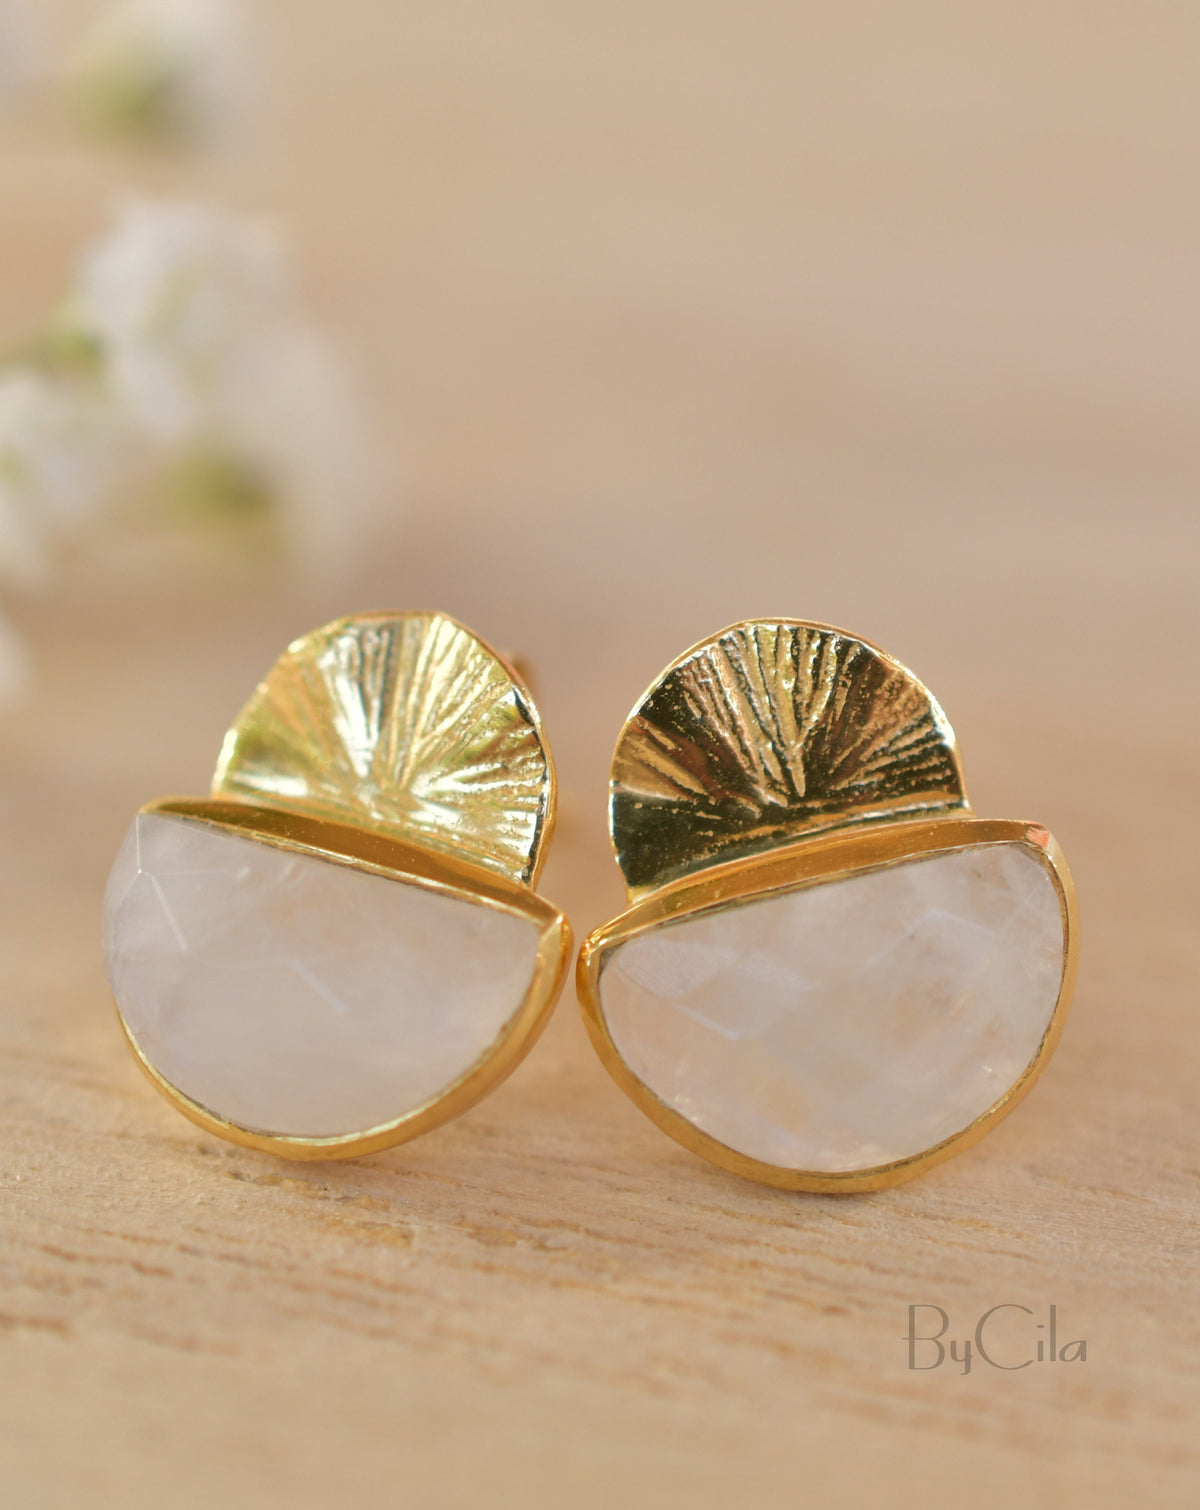 Moonstone Stud Earrings Gold Plated 18k or Sterling Silver 925 * Gemstone * Earrings * Rainbow Moonstone * Handmade * Boho * Modern * BJE158